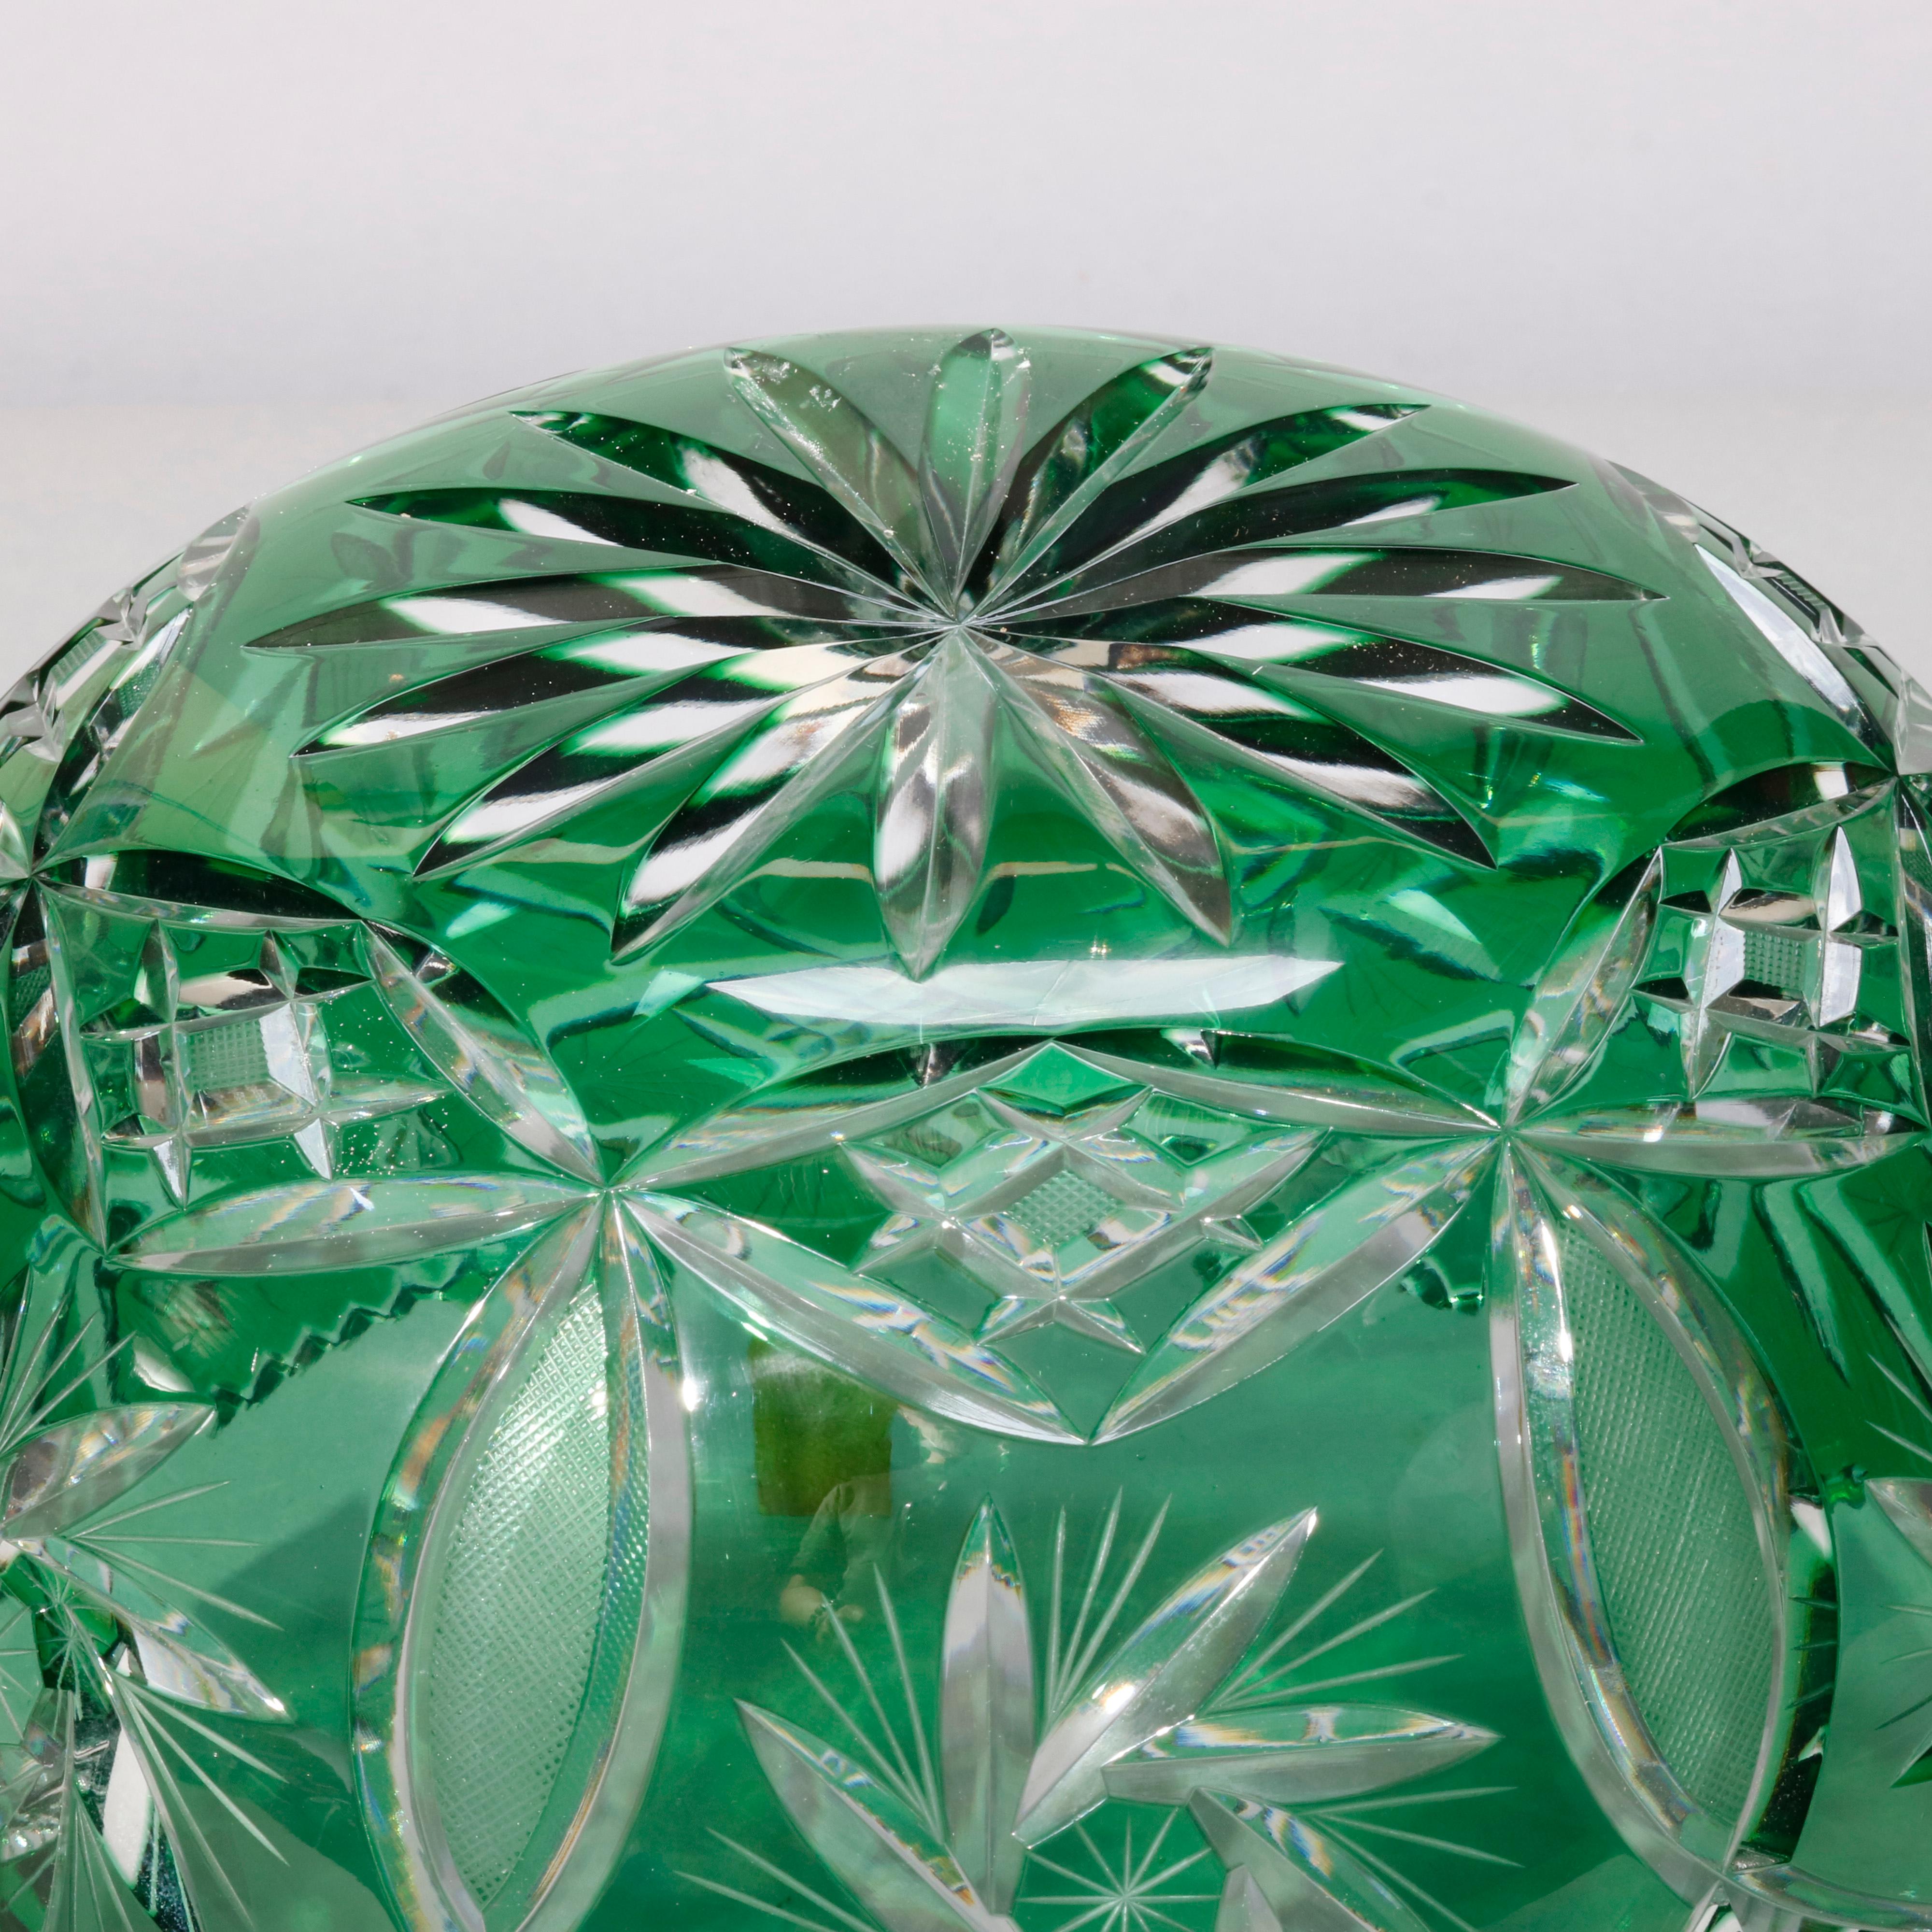 green cut glass bowl